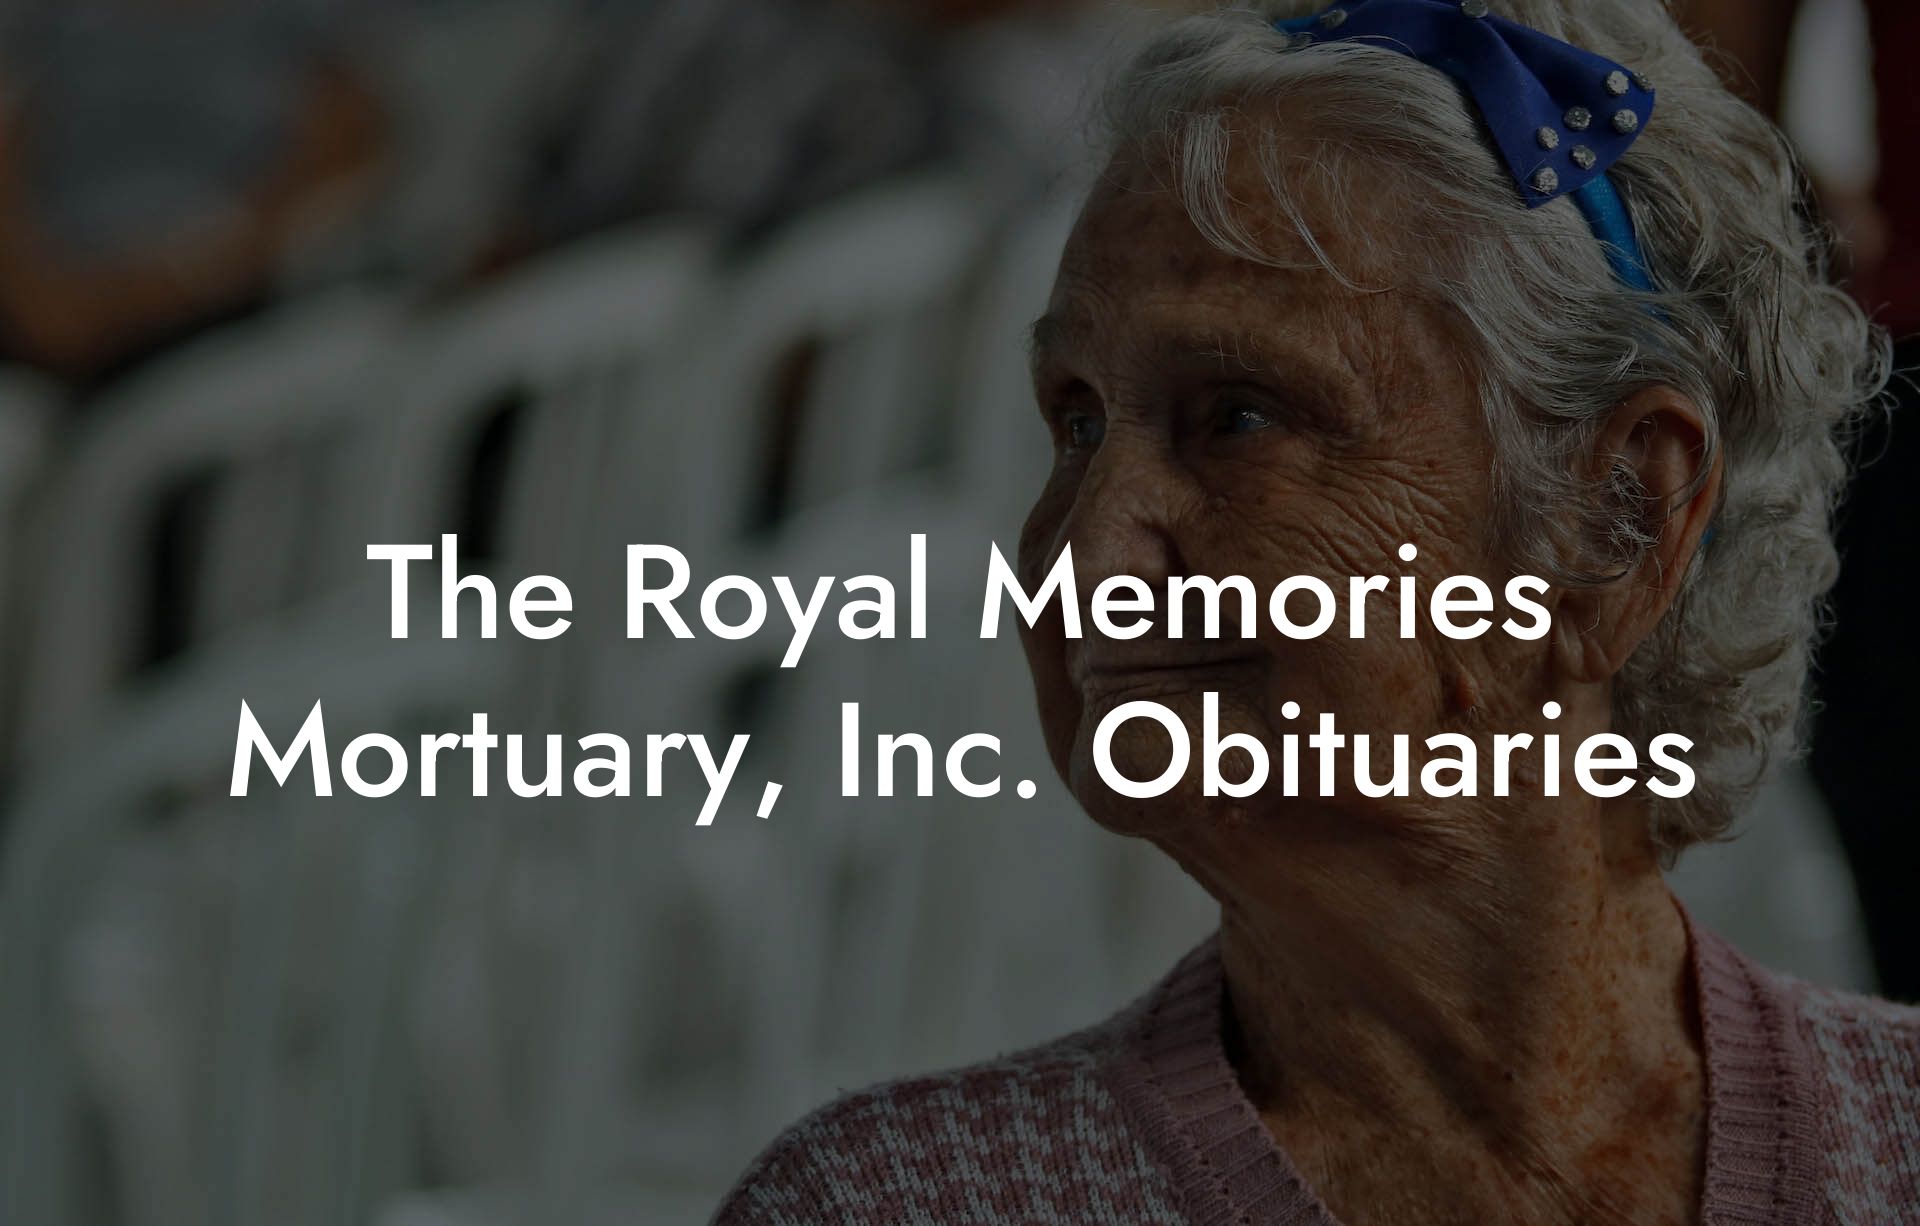 The Royal Memories Mortuary, Inc. Obituaries